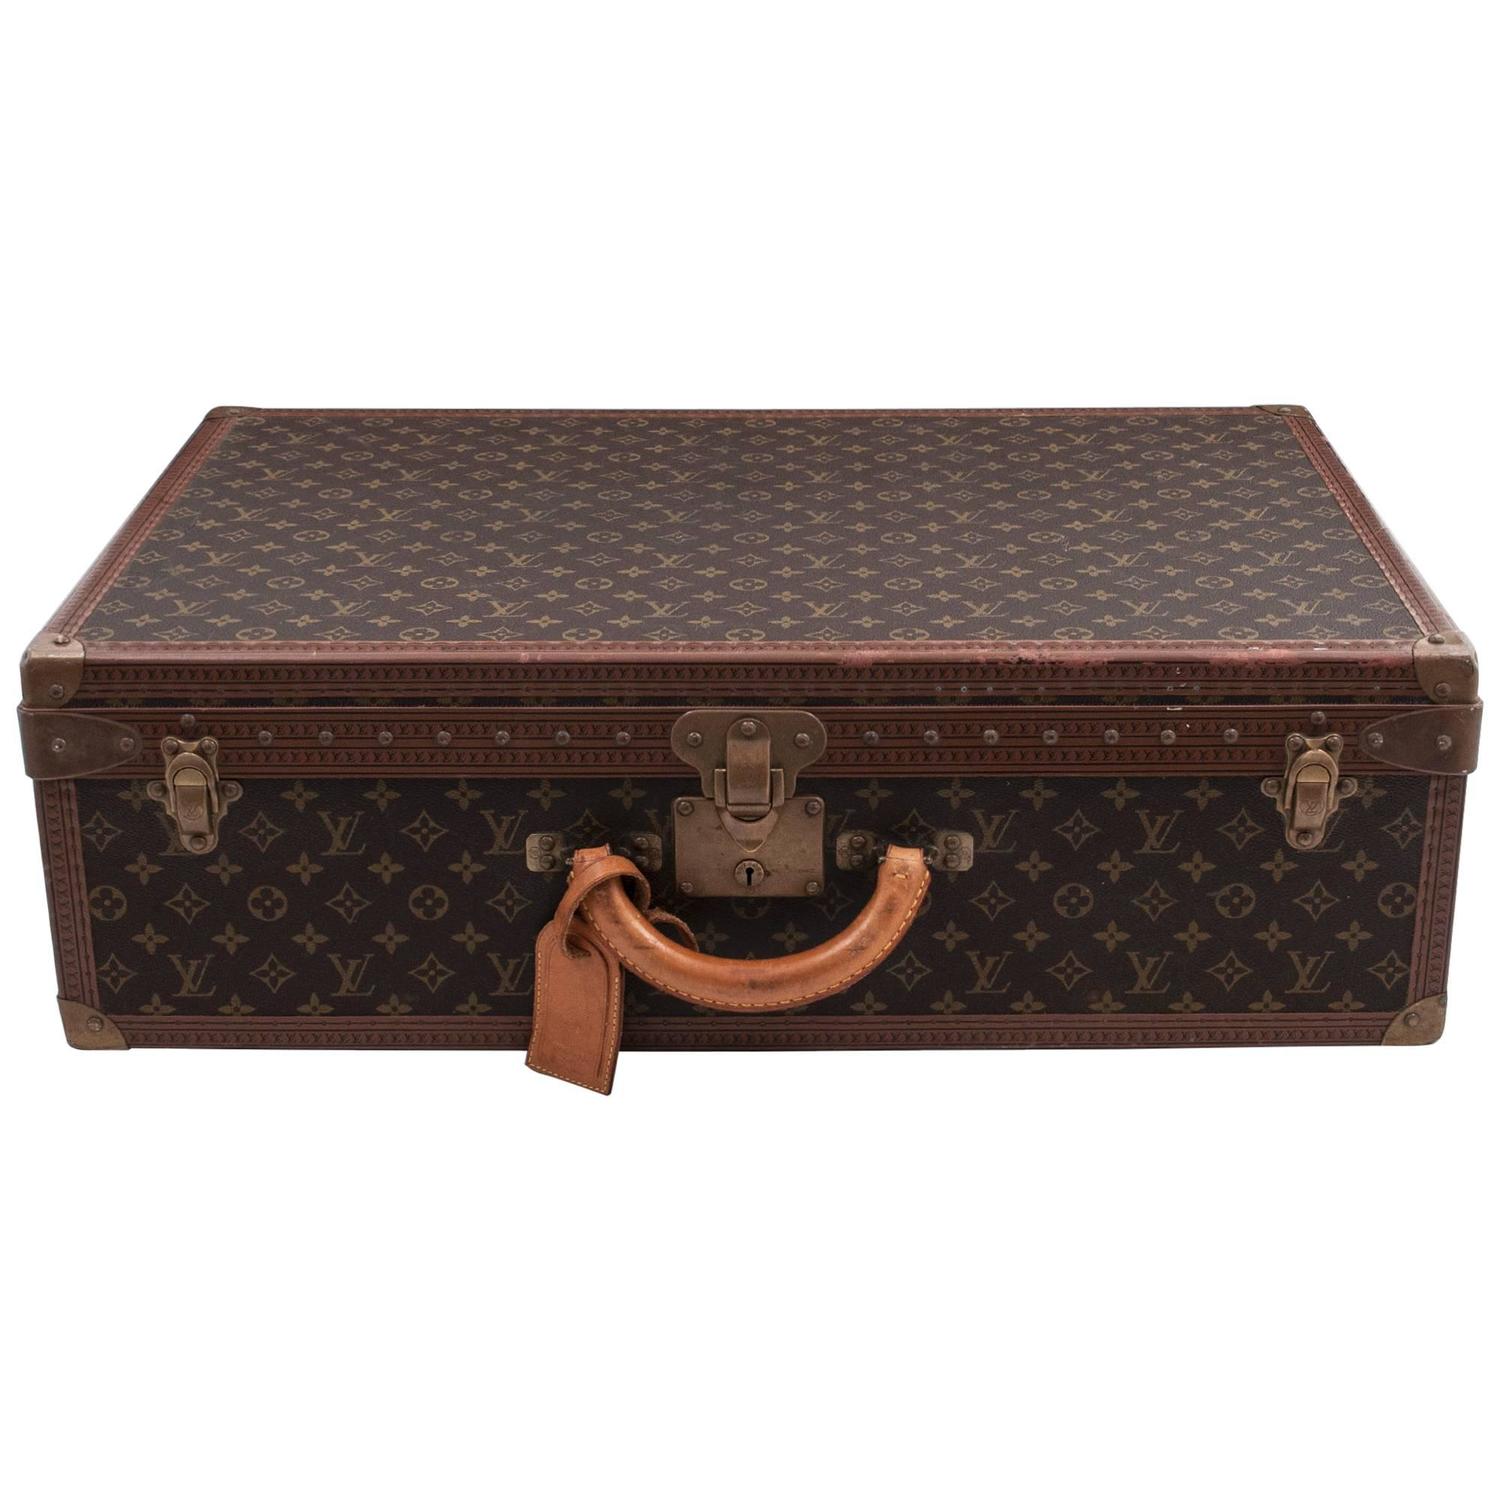 Louis Vuitton Luxury Vintage Suitcase at 1stdibs